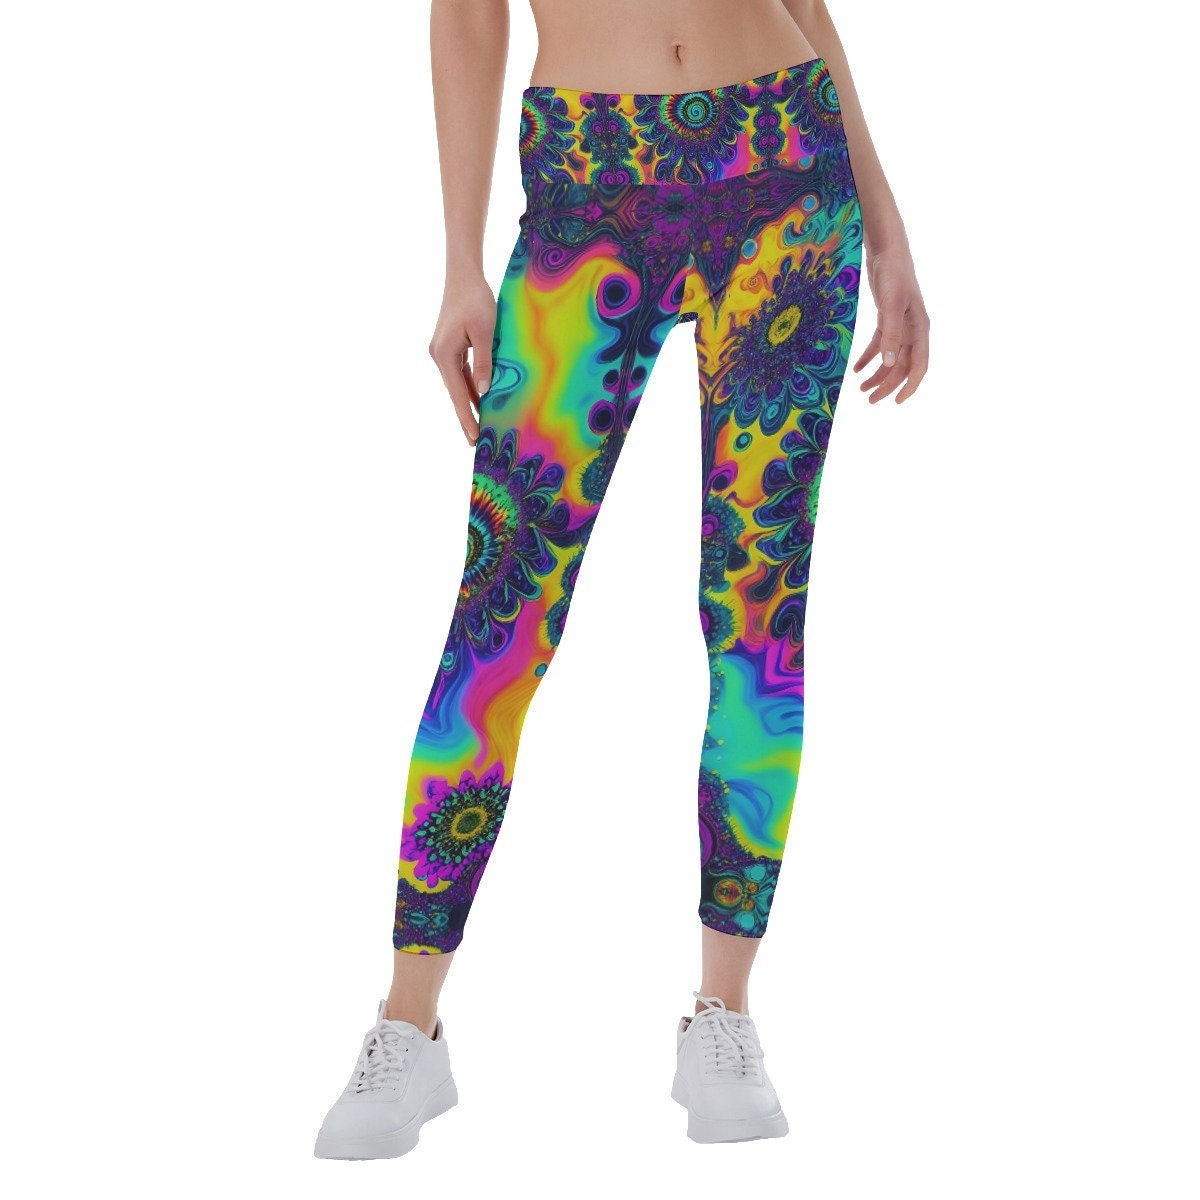 Lilac Pastel Squatproof Leggings Yoga Pants Opaque Gym Dance